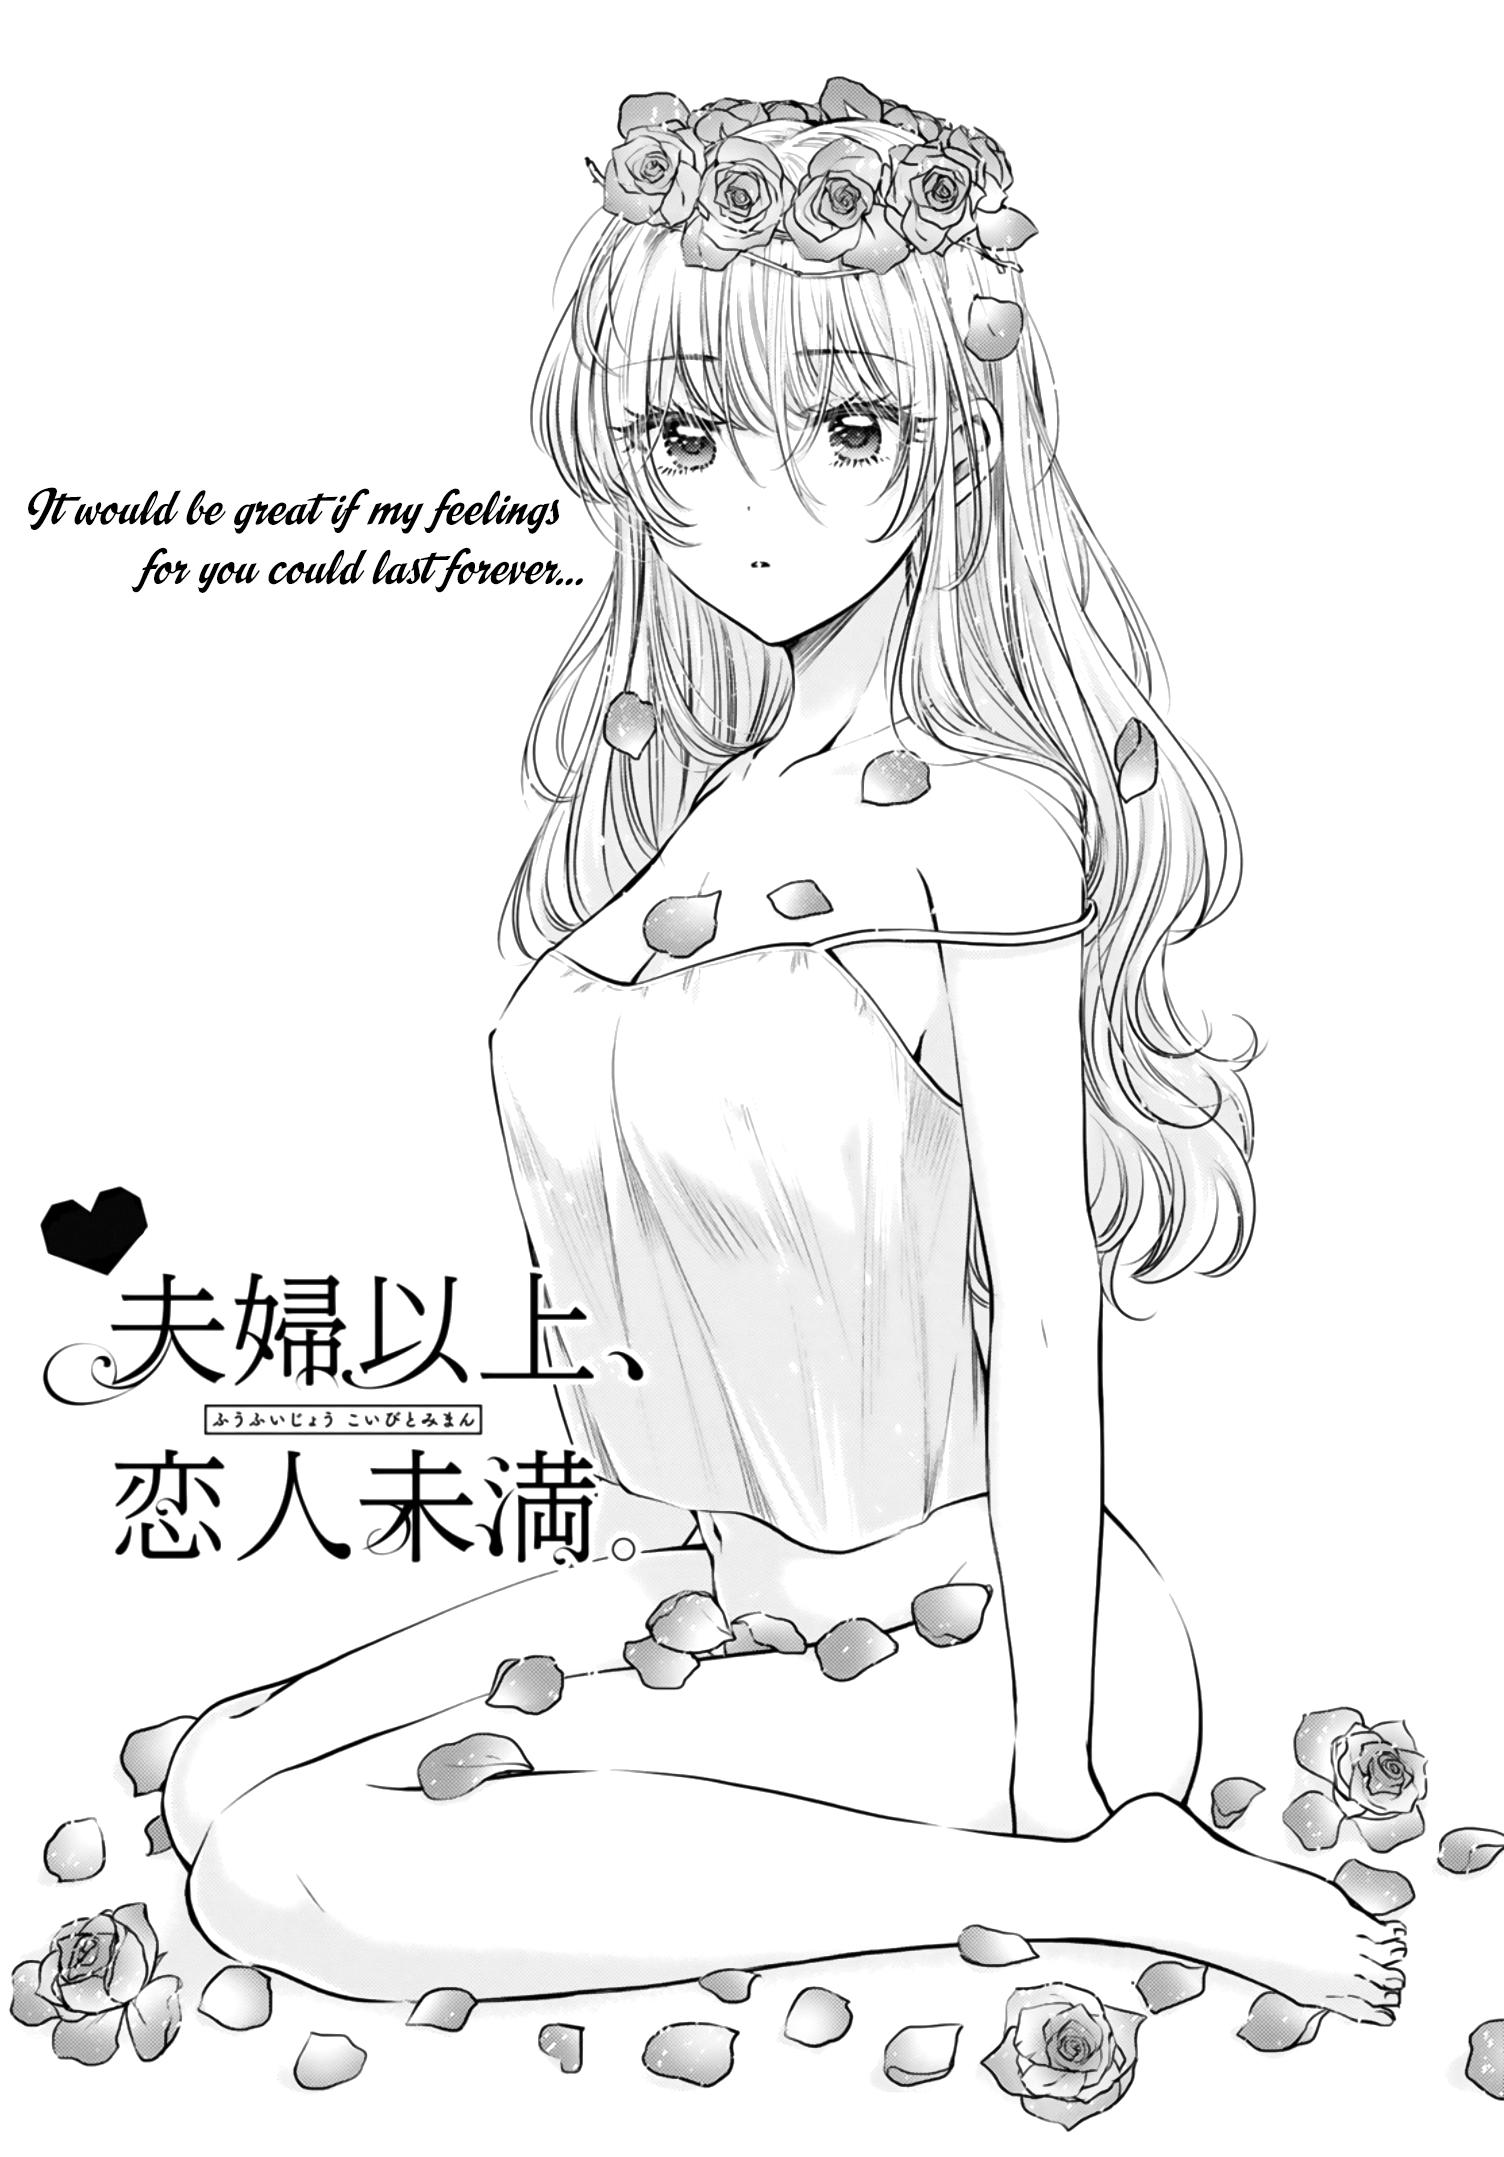 Fuufu Ijou, Koibito Miman. Capítulo 32 - Manga Online